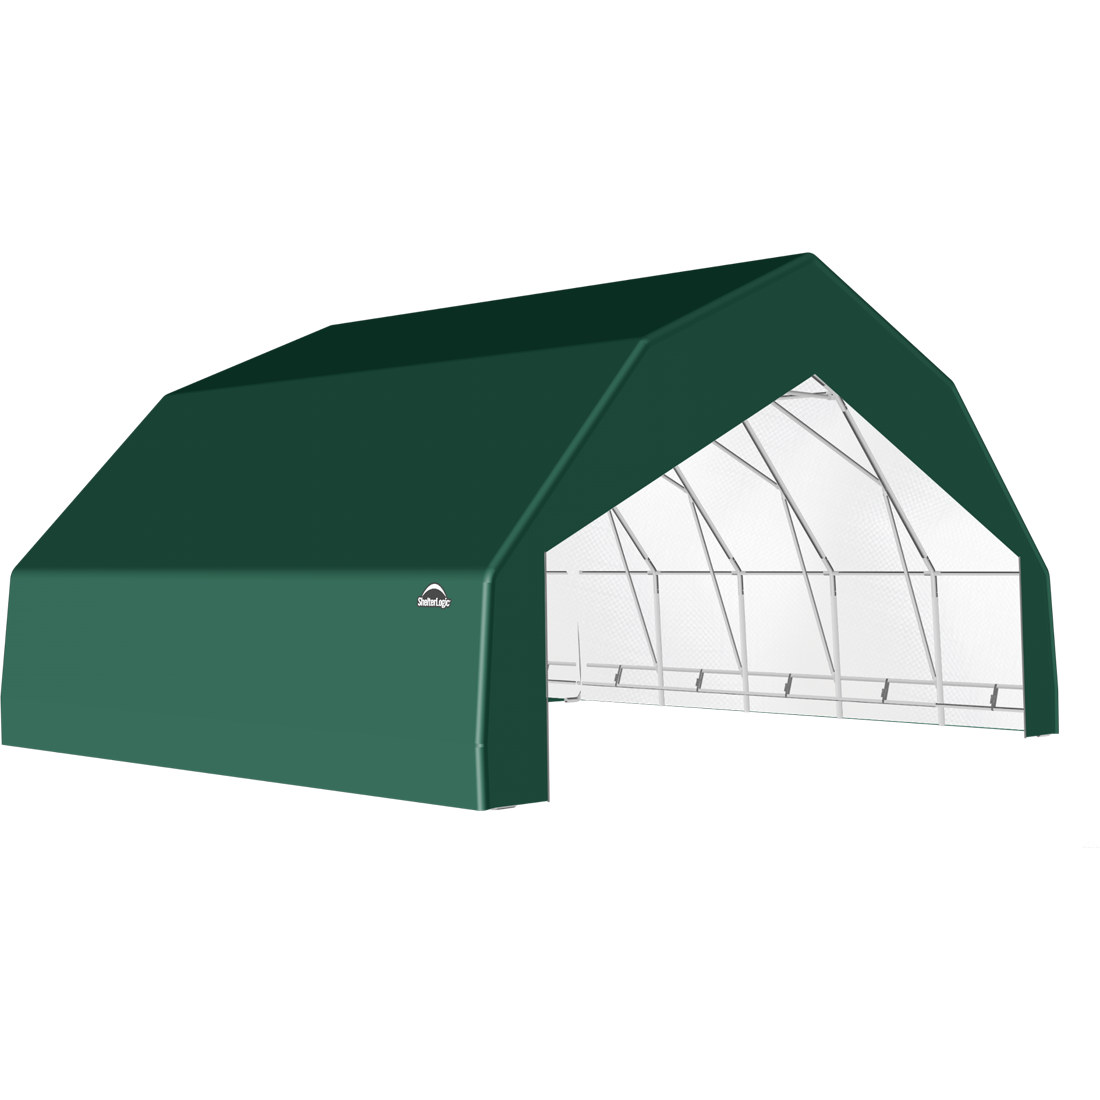 ShelterTech SP Series Barn Shelter, 30 ft. x 20 ft. x 15 ft. Heavy Duty PVC 14.5 oz. Green